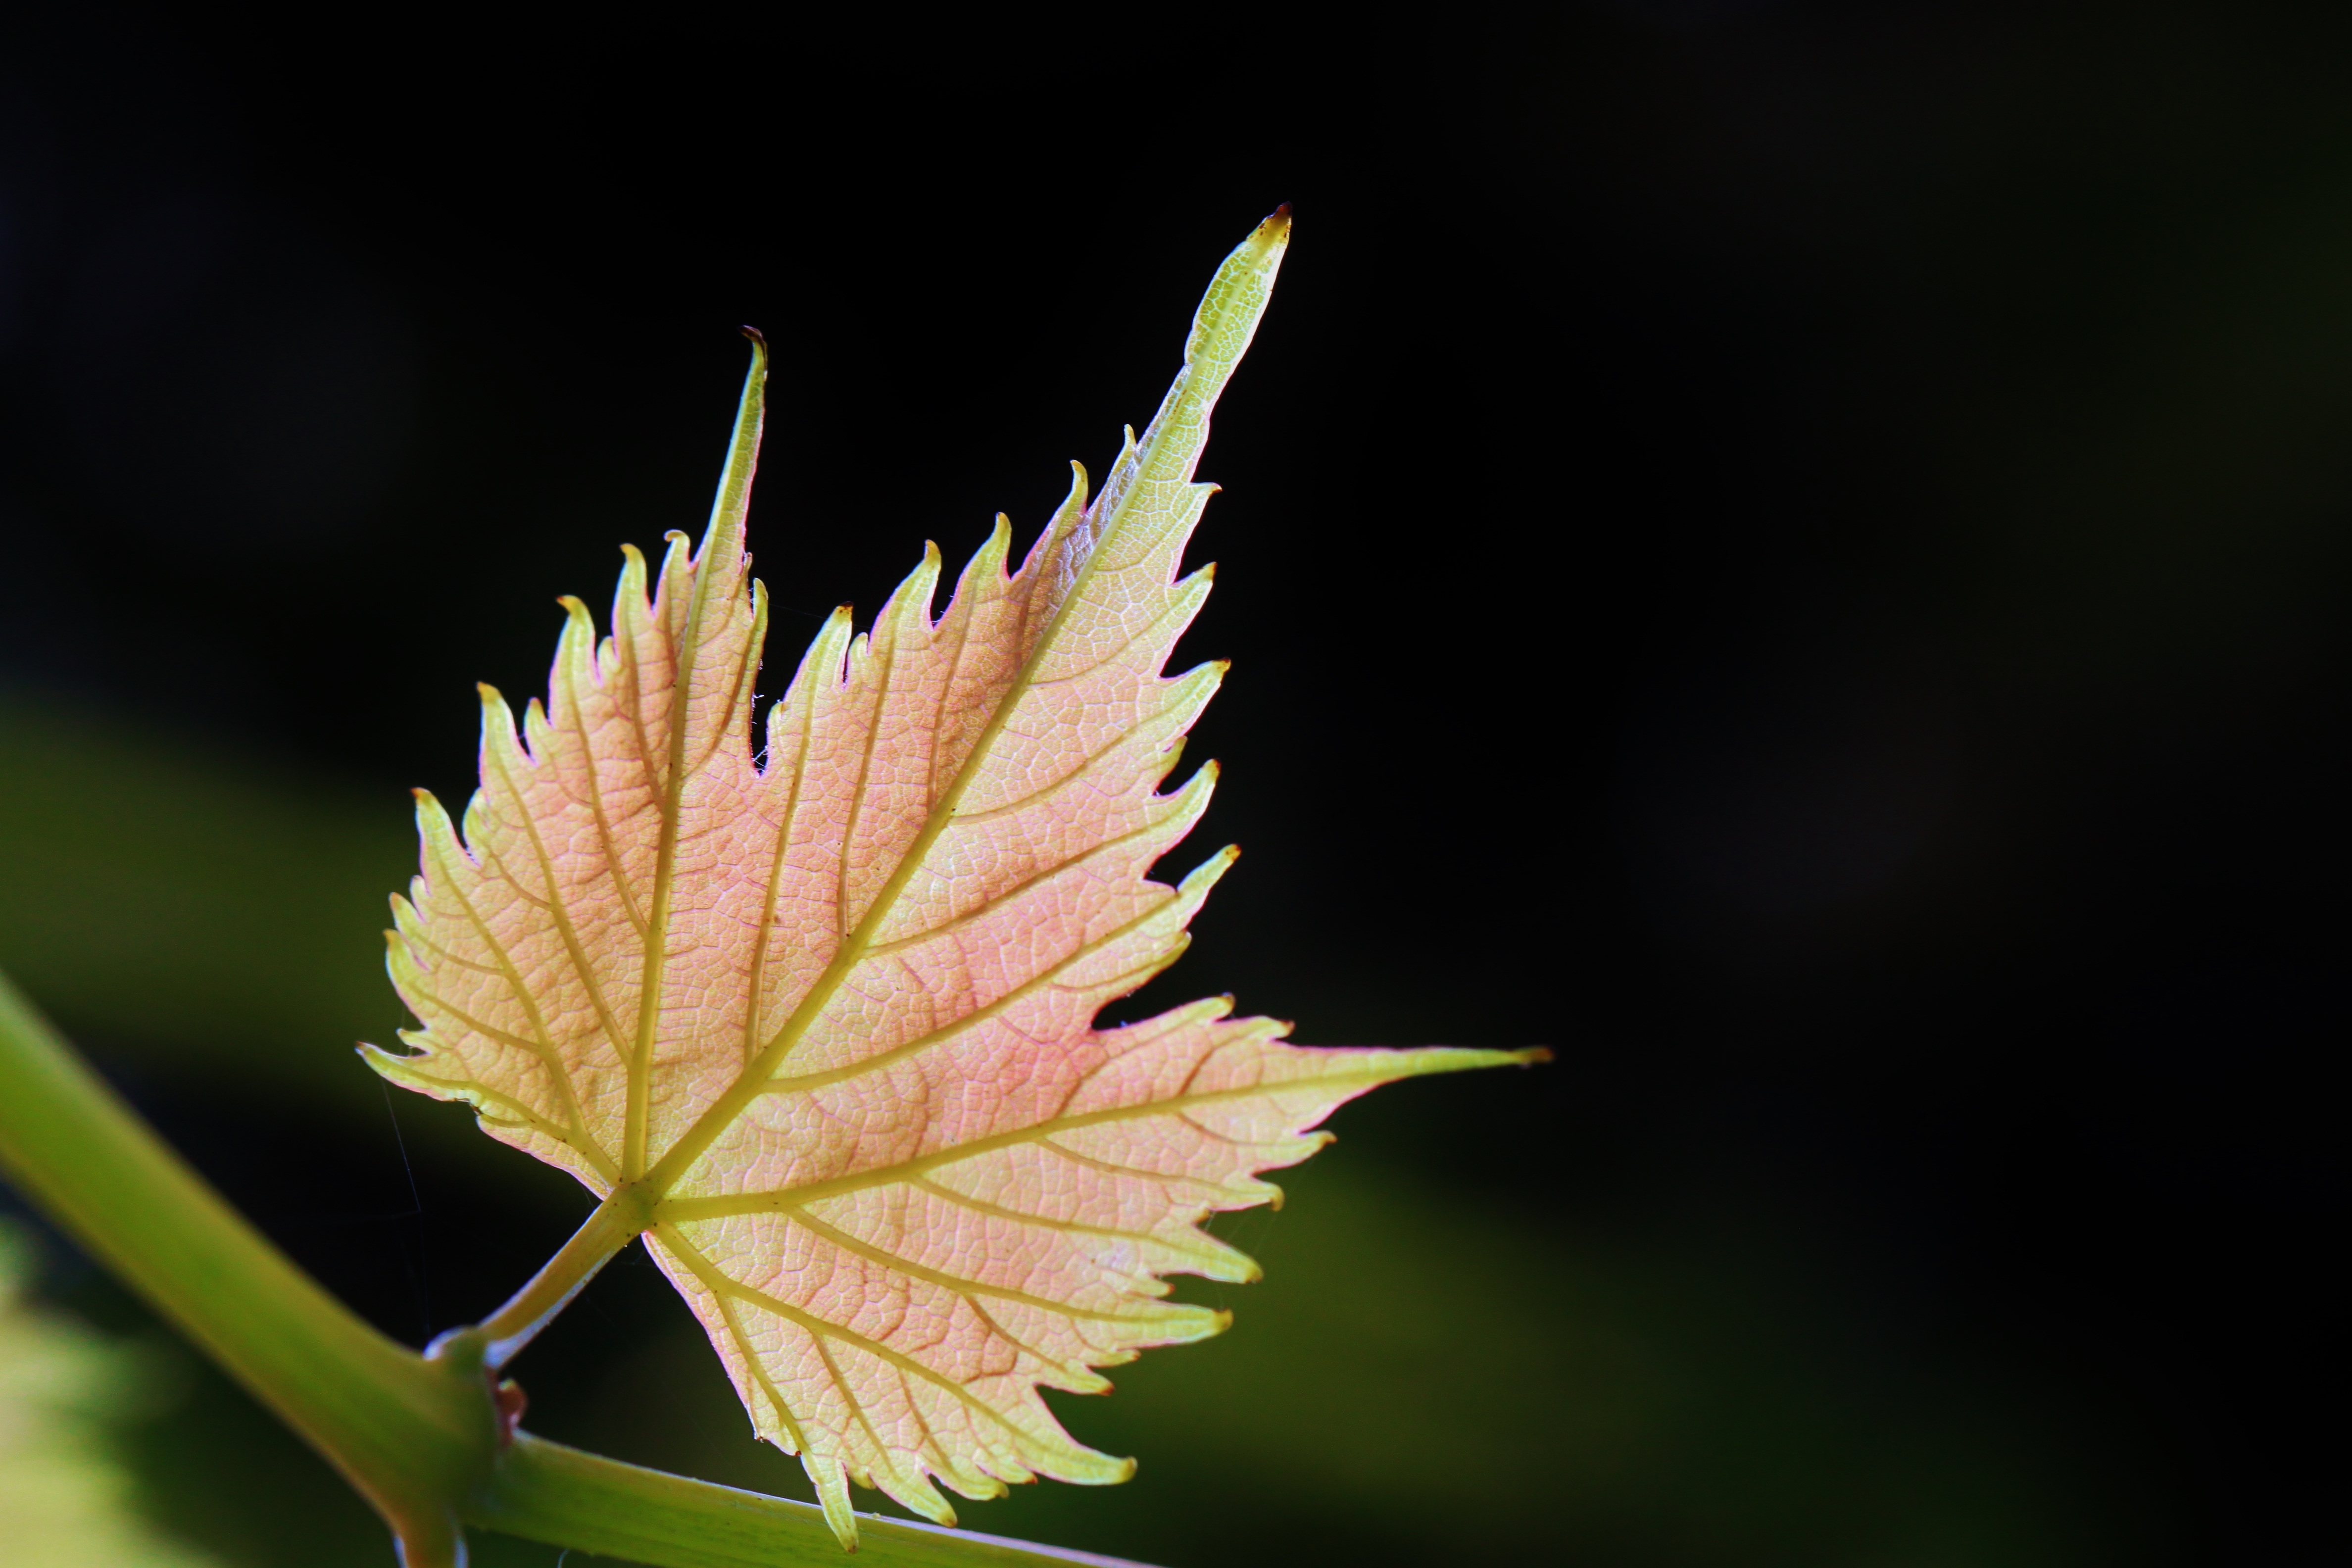 Maple leaf photo